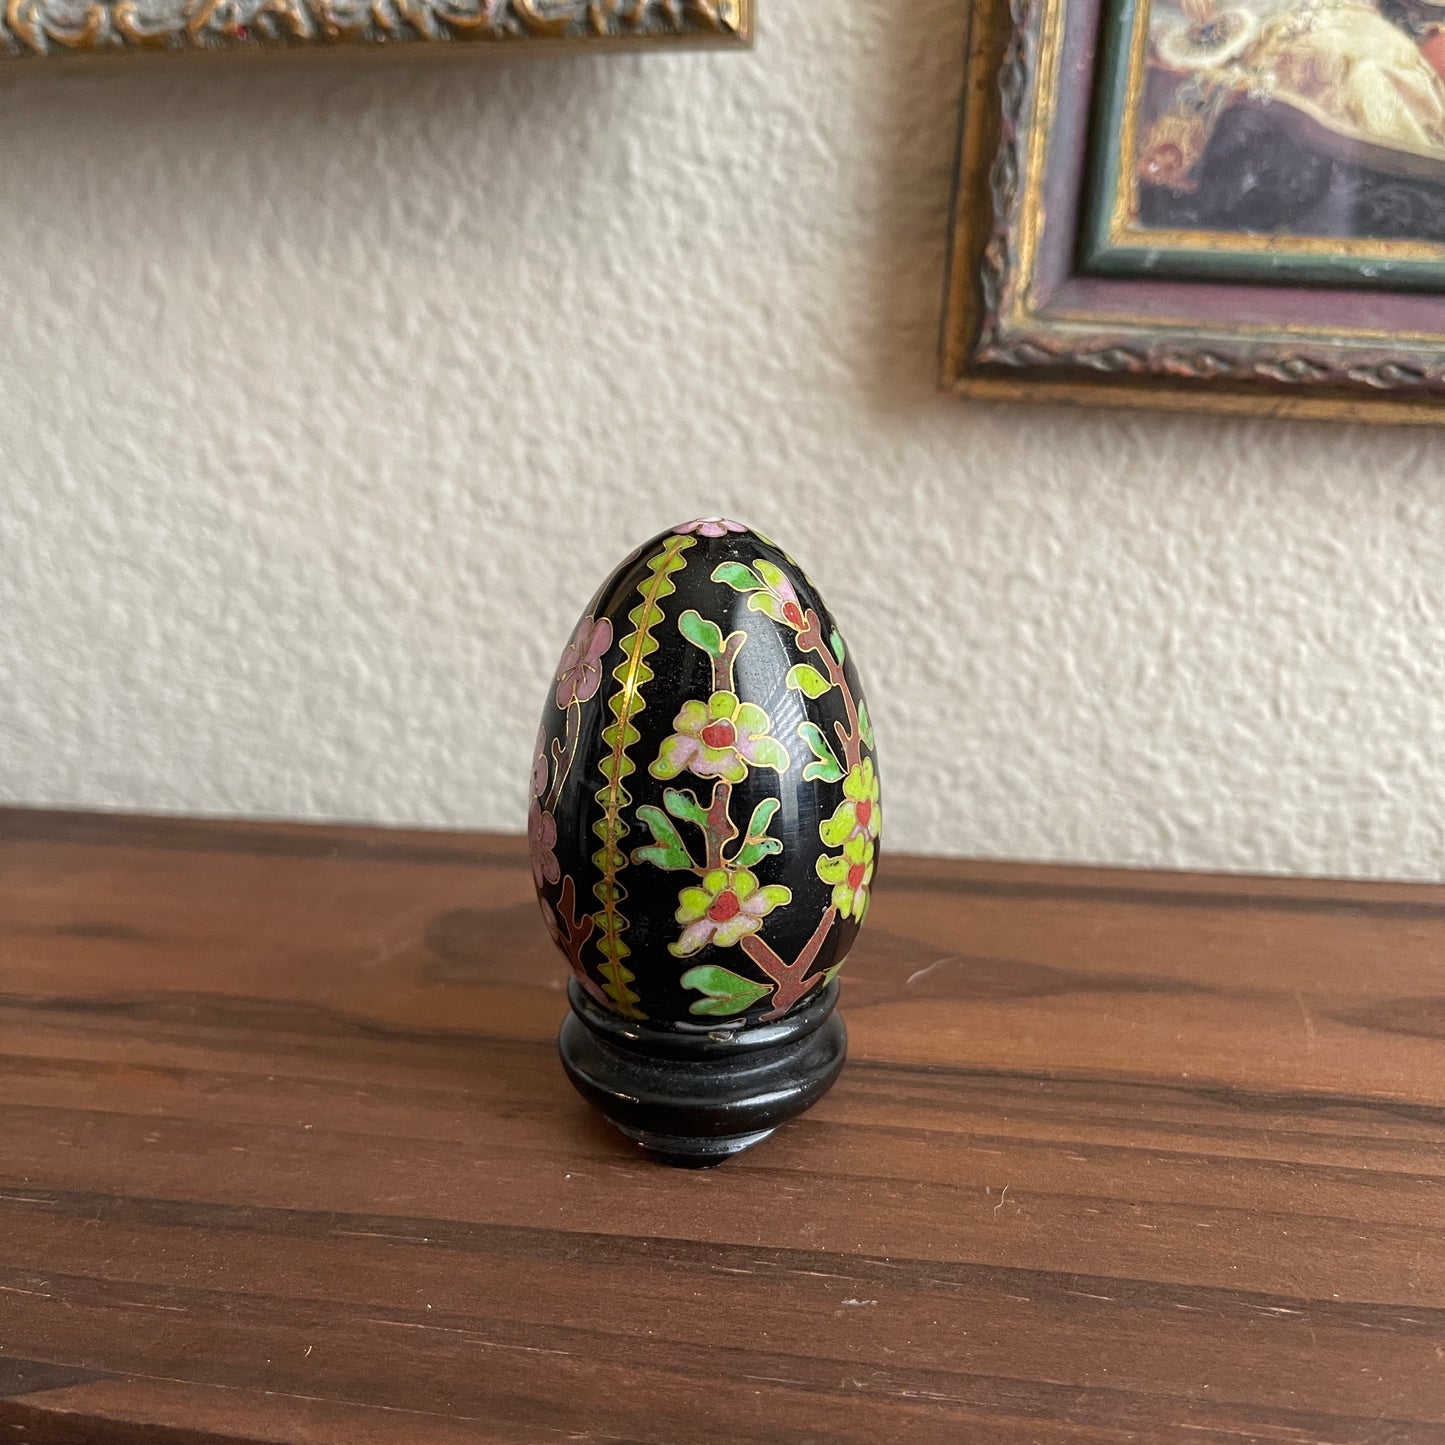 Vintage Cloisonné floral design Chinese ceramic egg